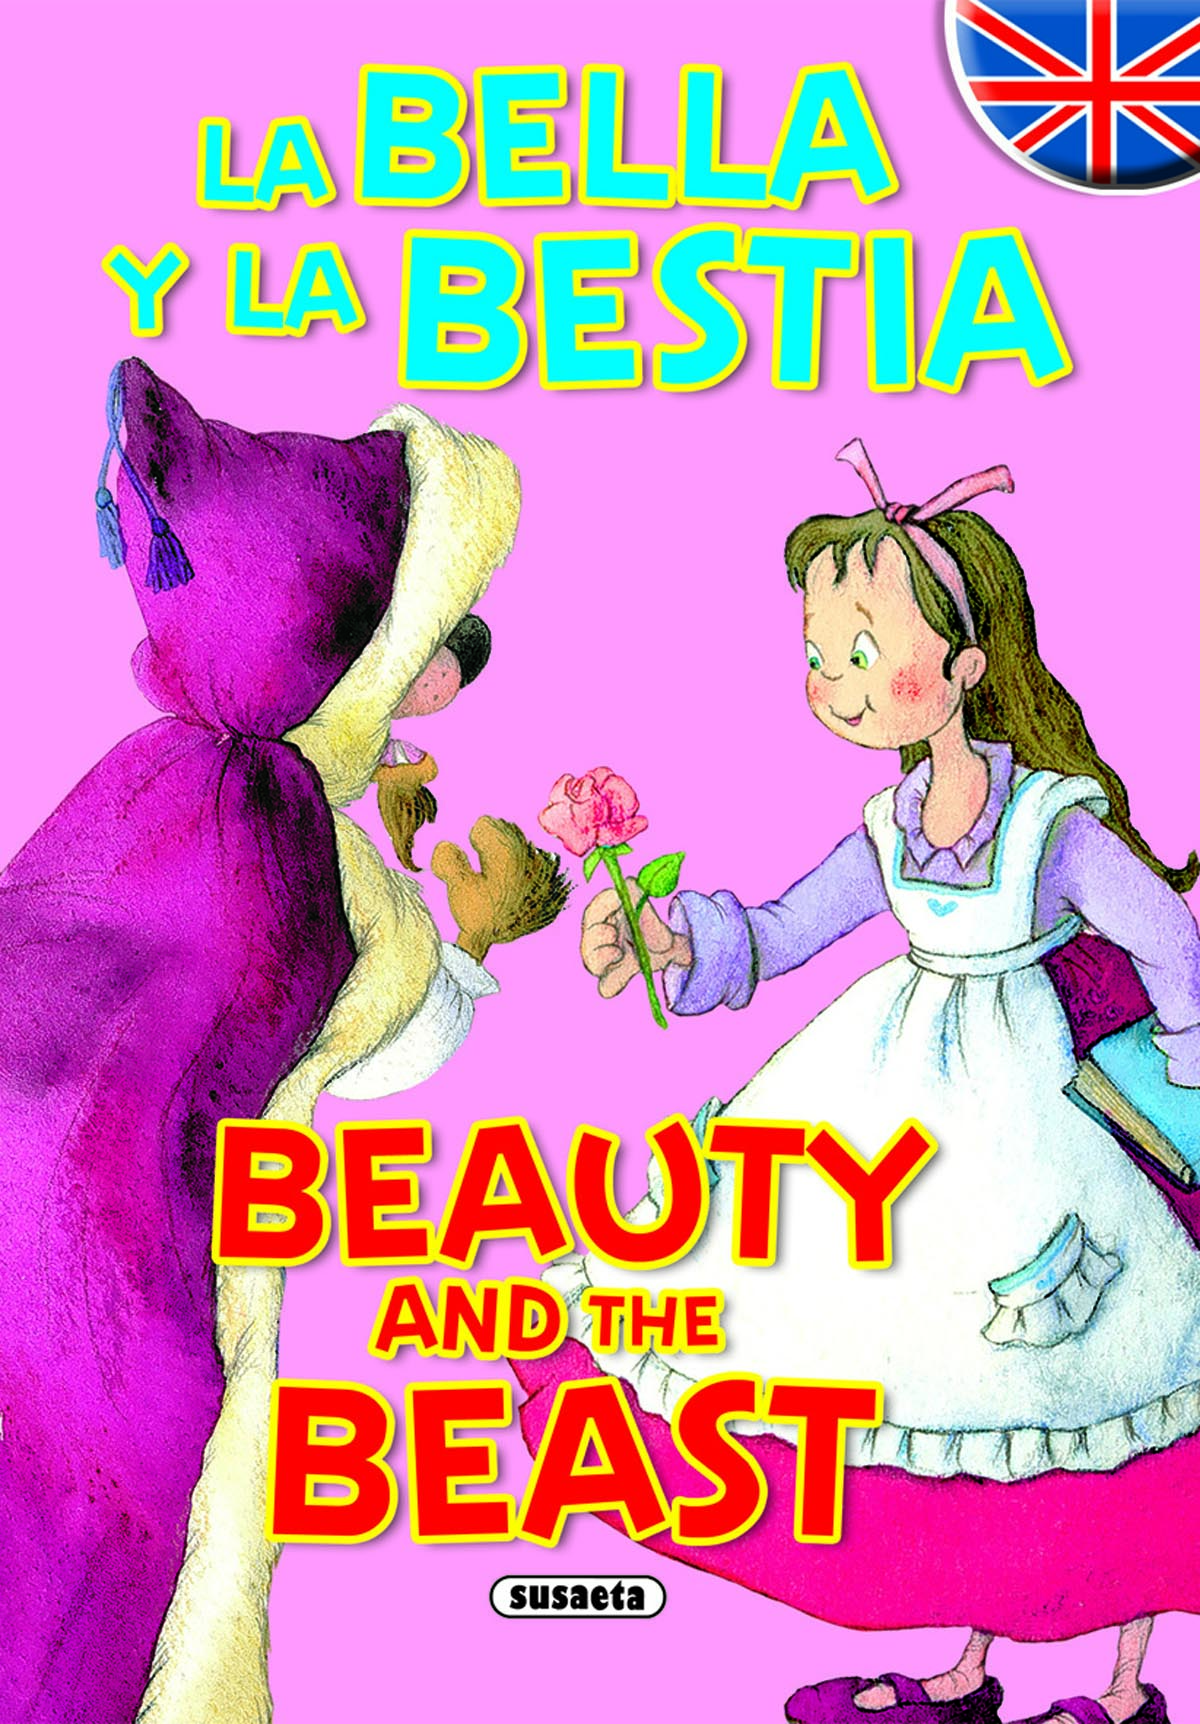 La Bella y la Bestia - Beauty and the Beast